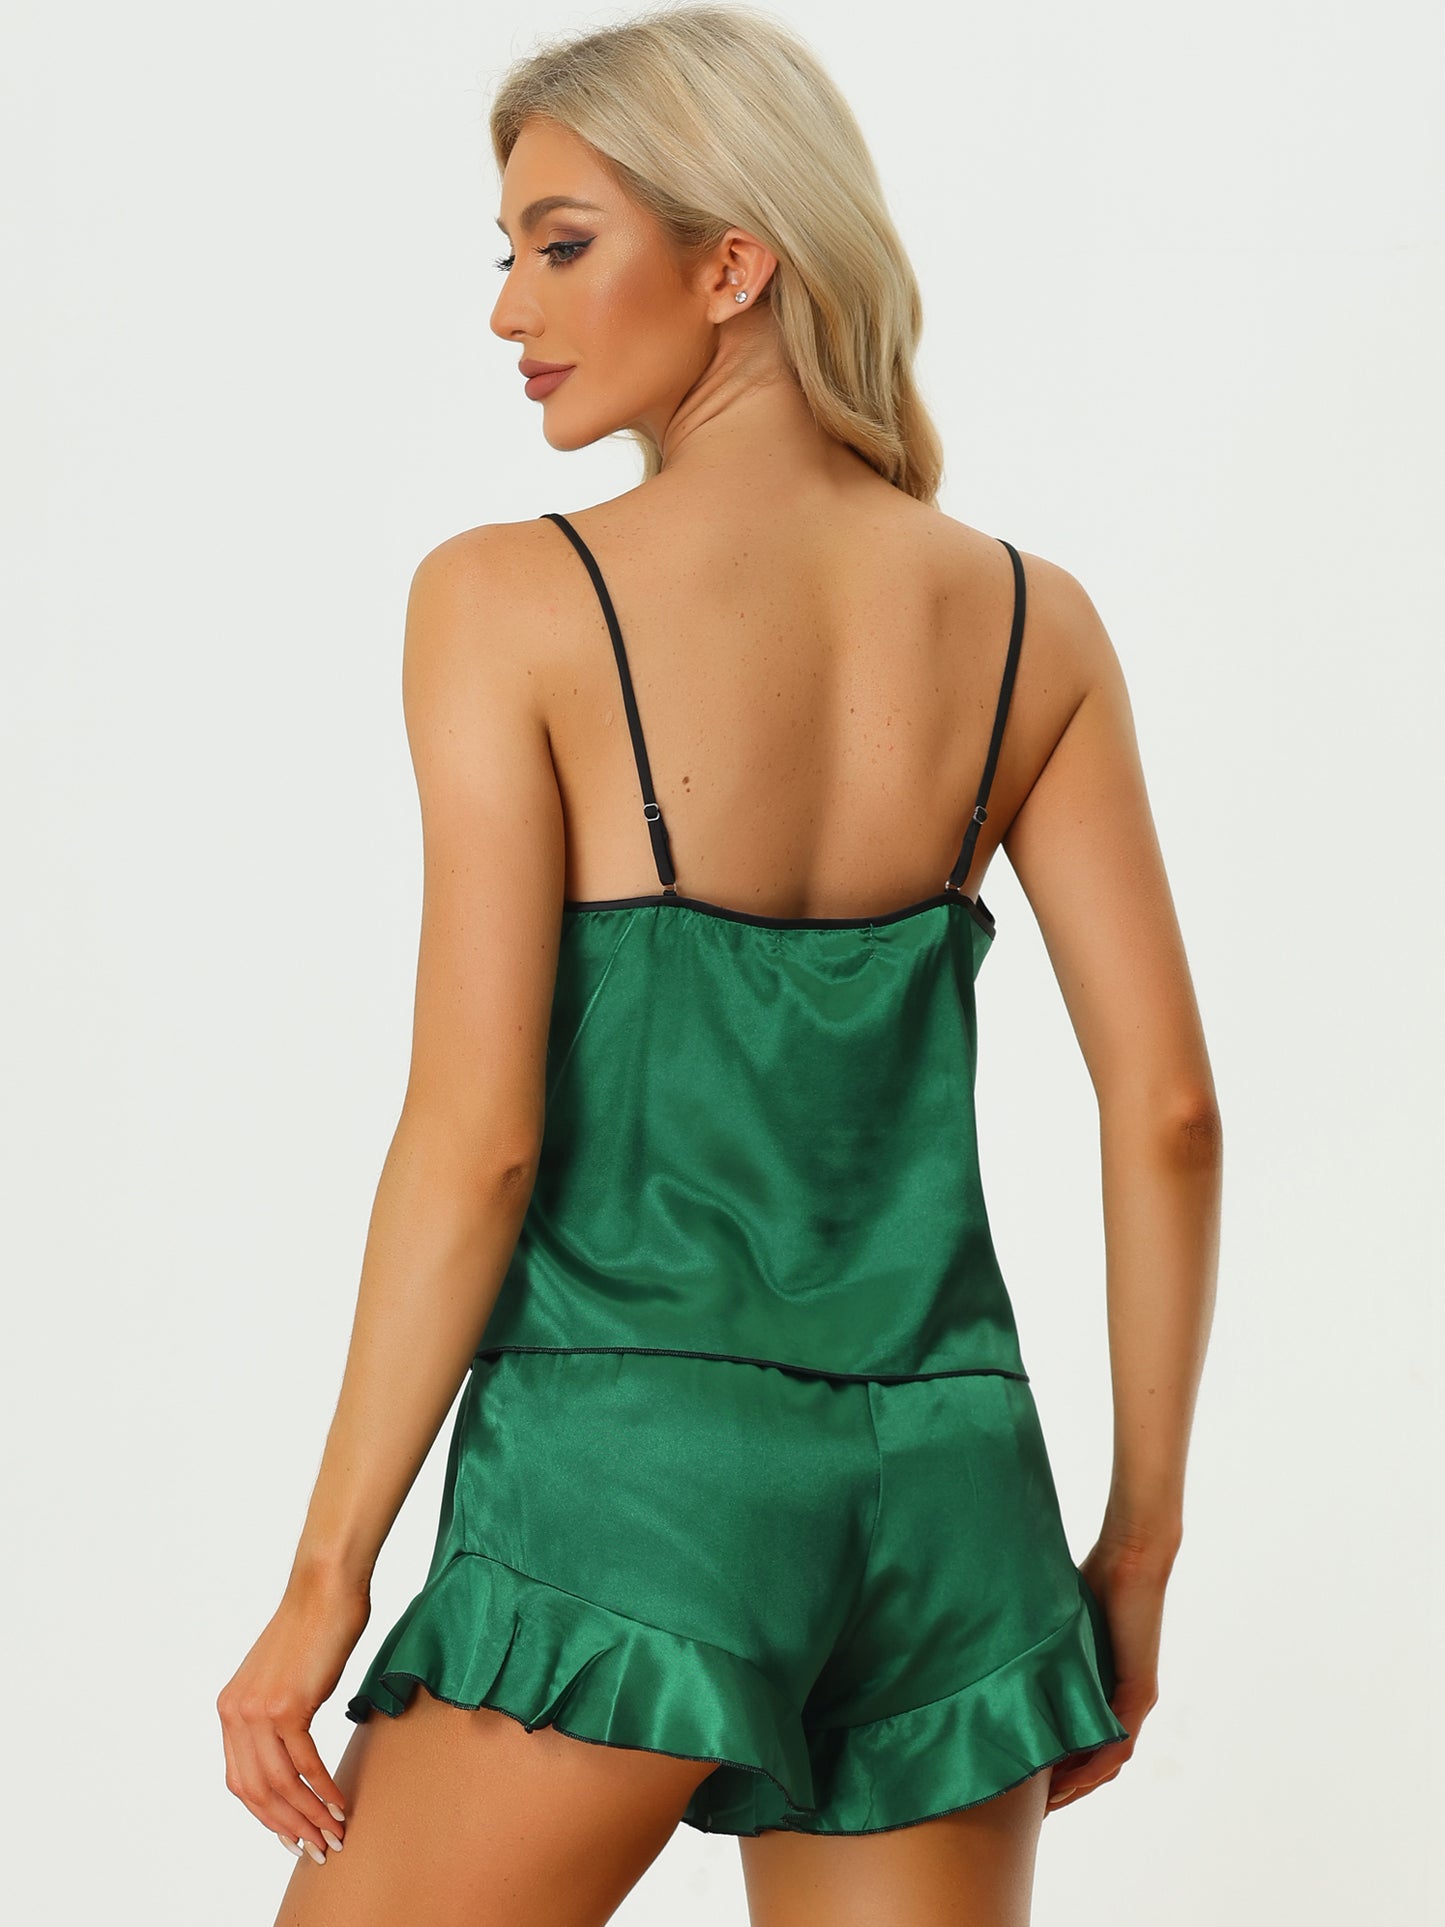 cheibear Satin Lingerie Cami Tops Shorts Sleepwear Pajamas Sets Green